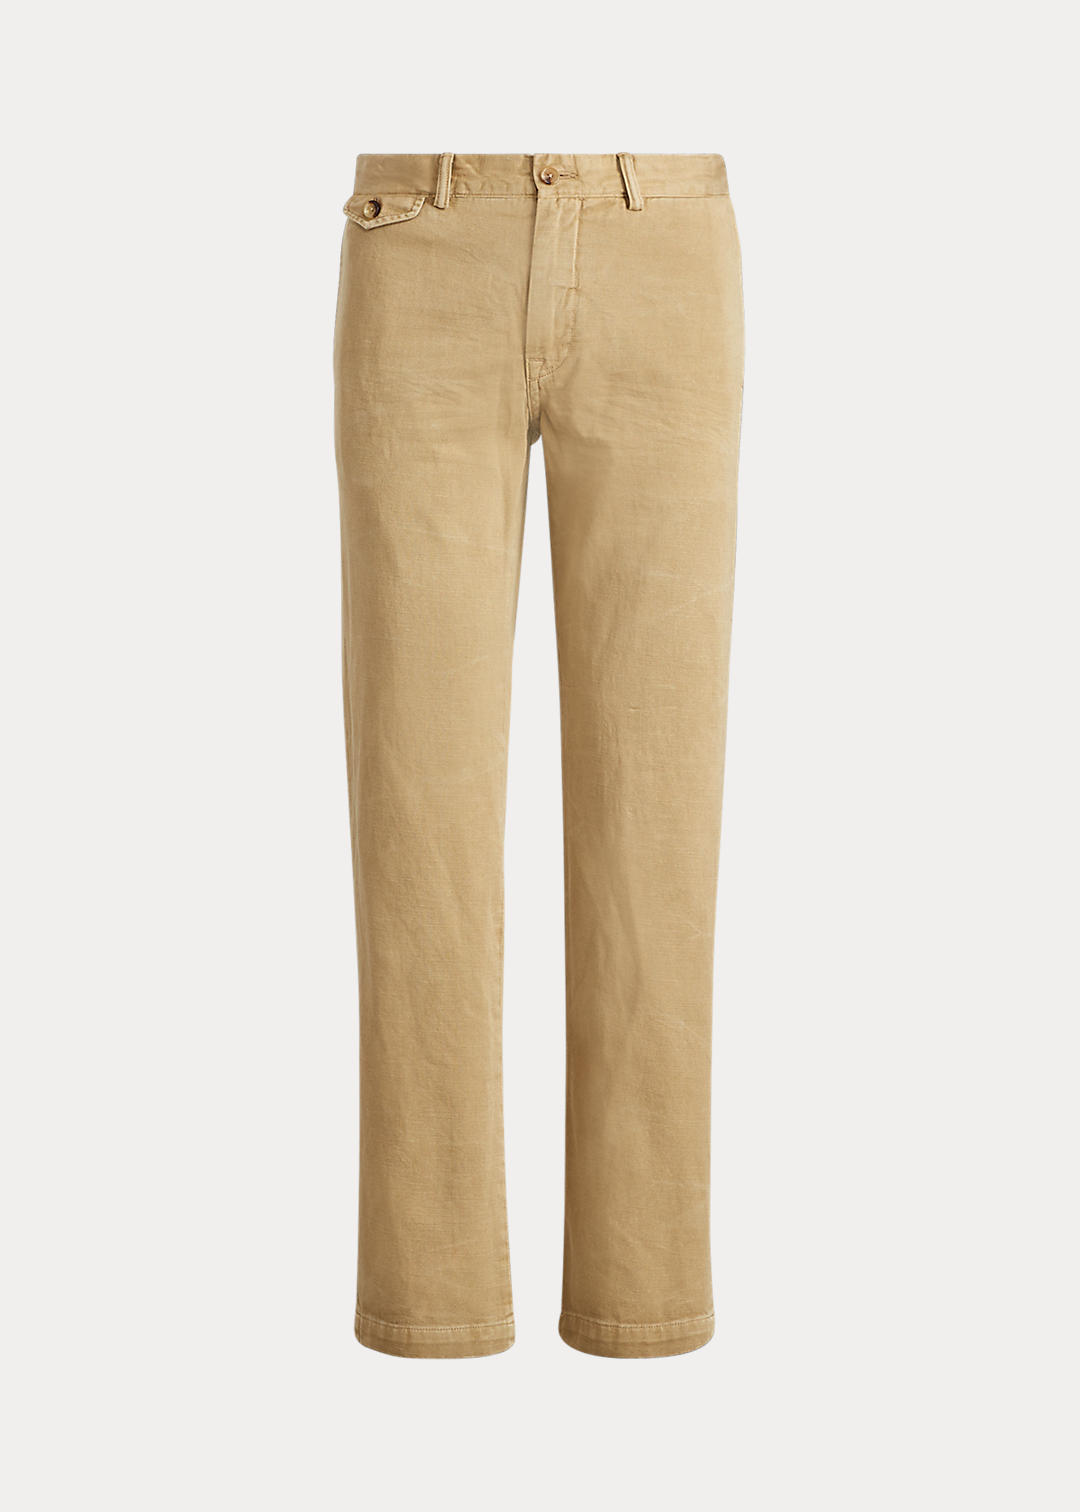 Ralph Lauren Collection Garrison Chino Trouser 2